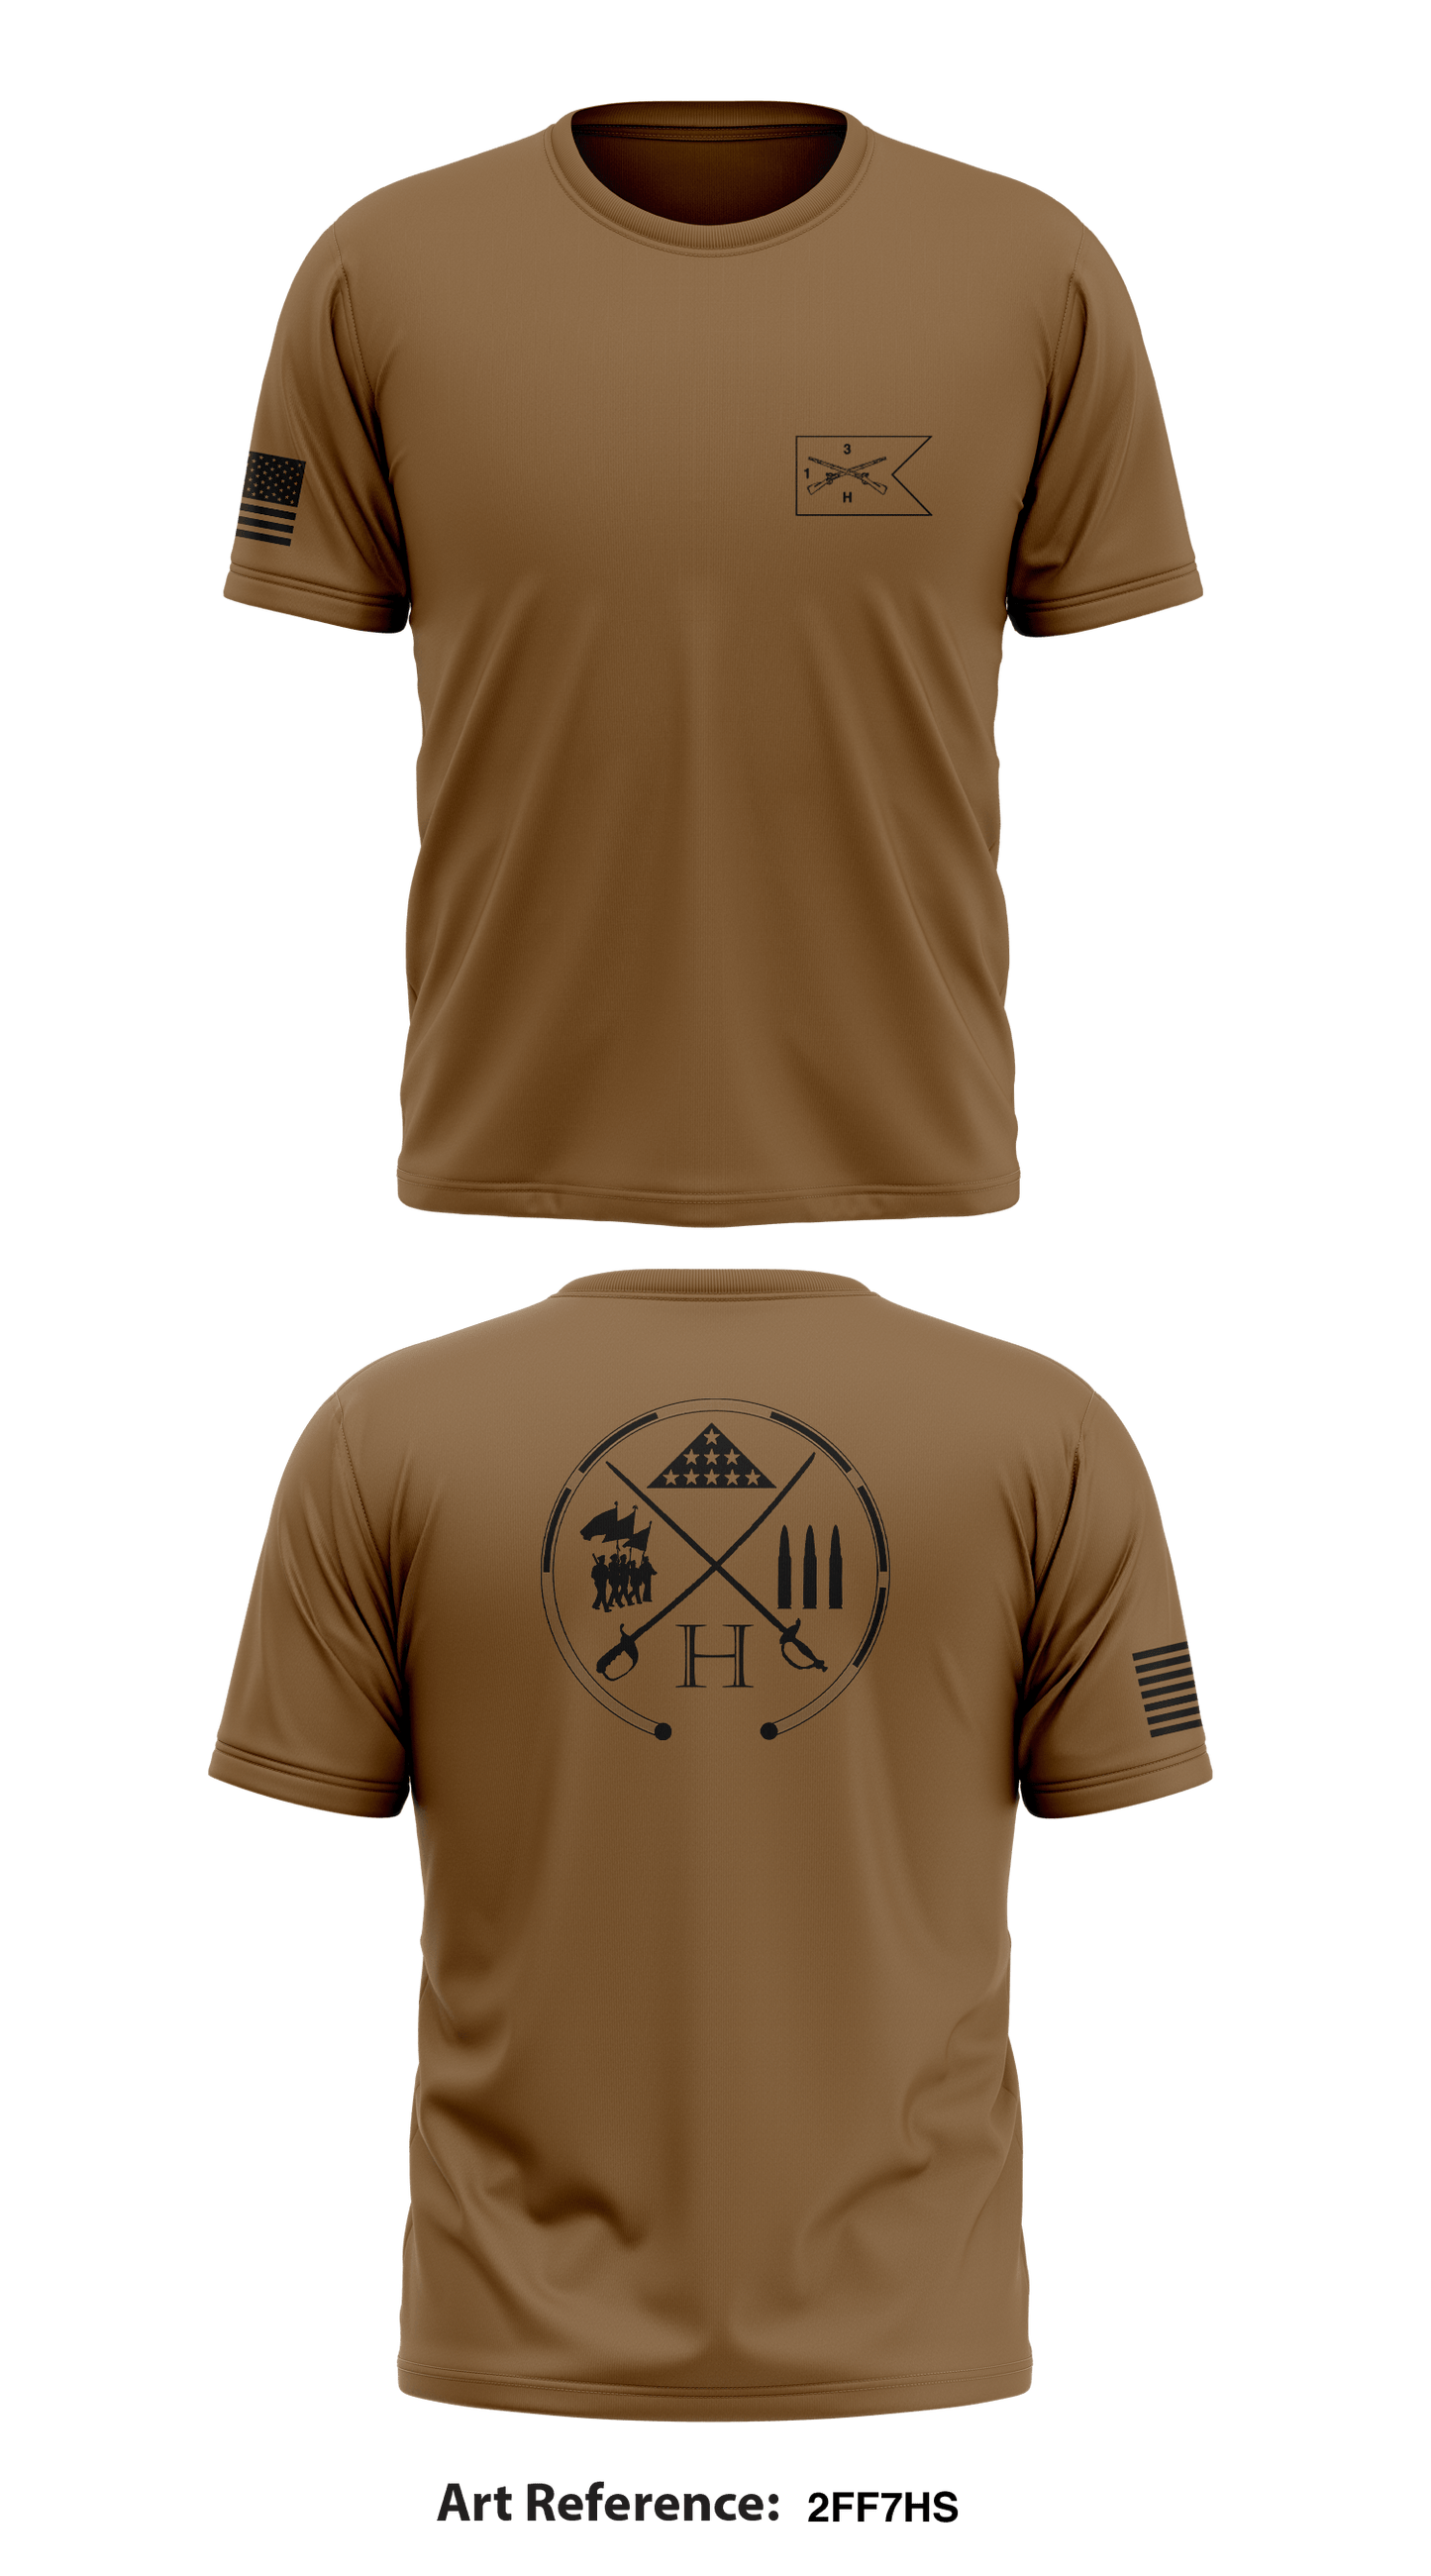 Hard Rock Company Store 1 Short-Sleeve Hybrid Performance Shirt Core Men's Hooded Performance Sweatshirt - 2Ff7hS